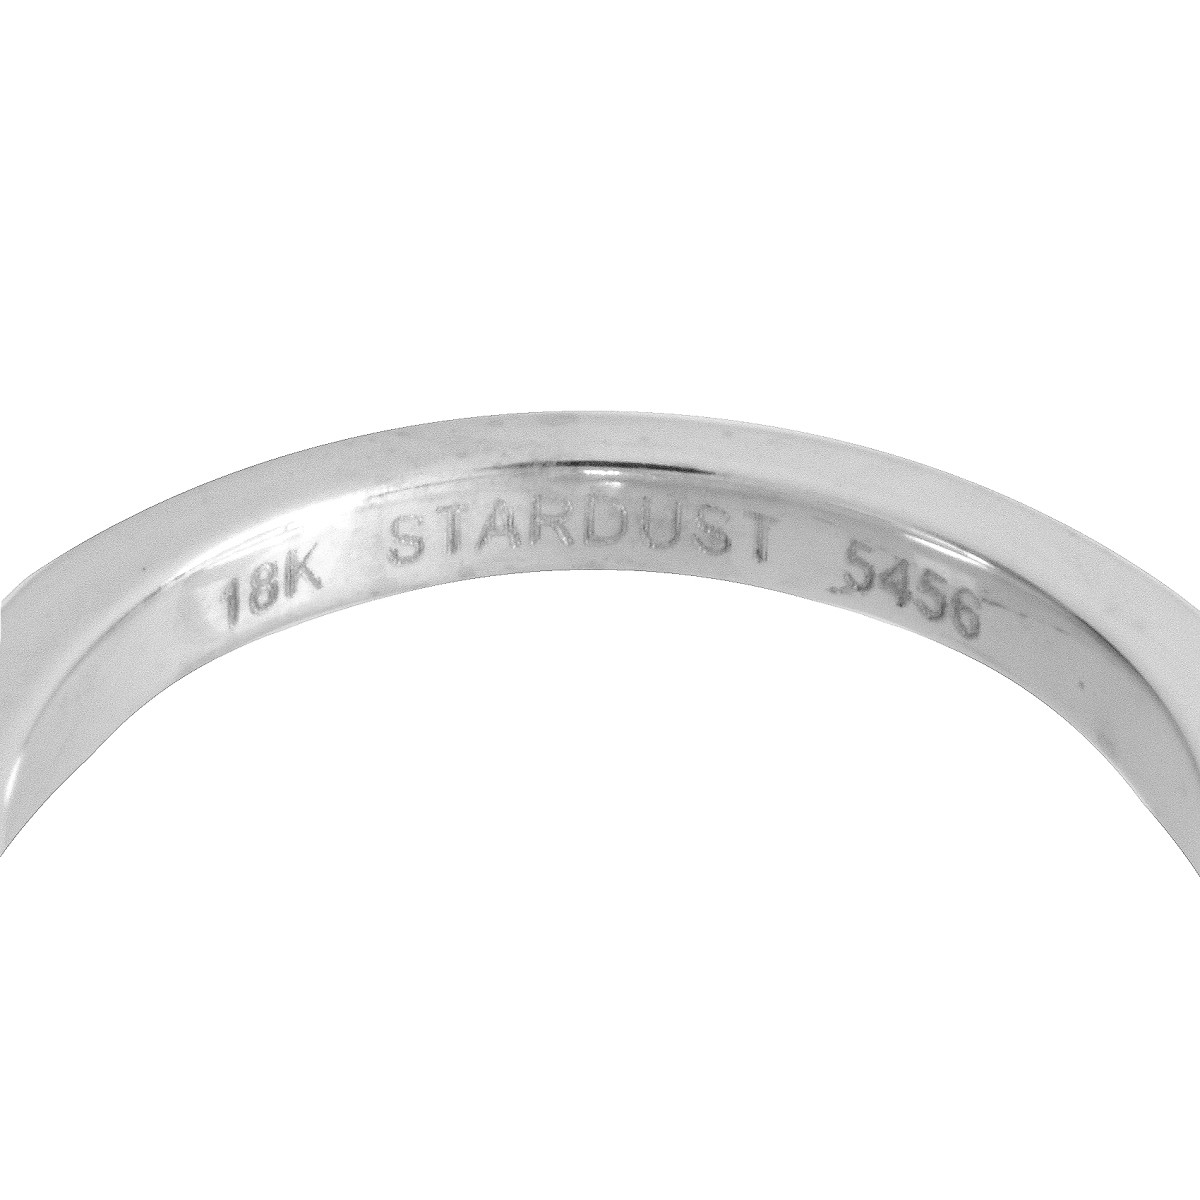 GIA 1.51 Carat Diamond and 18K Ring